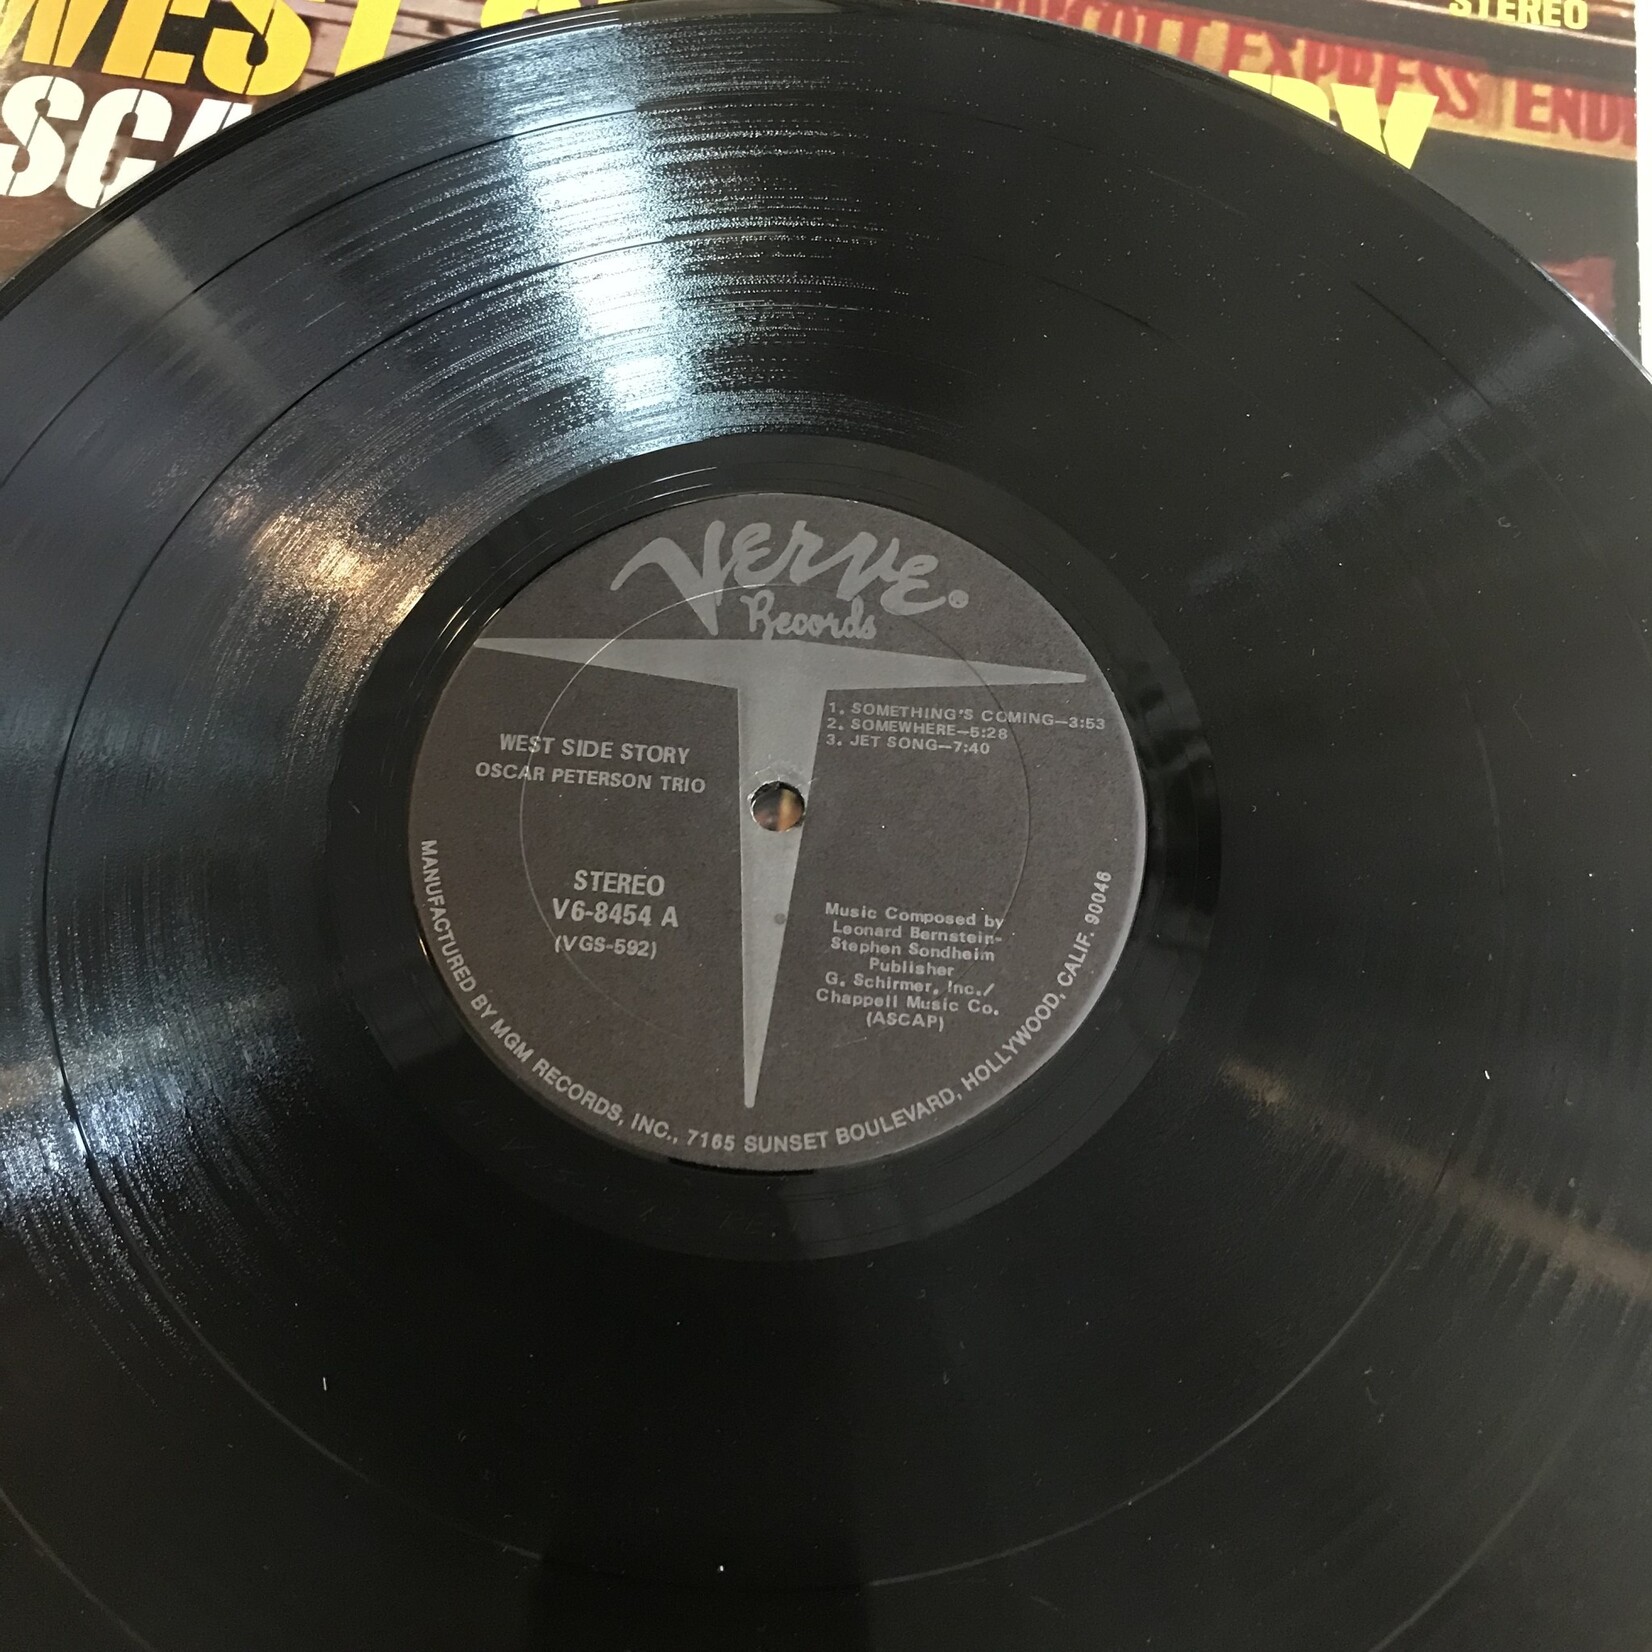 Oscar Peterson Trio - West Side Story - V6 8454 Vinyl LP (USED)